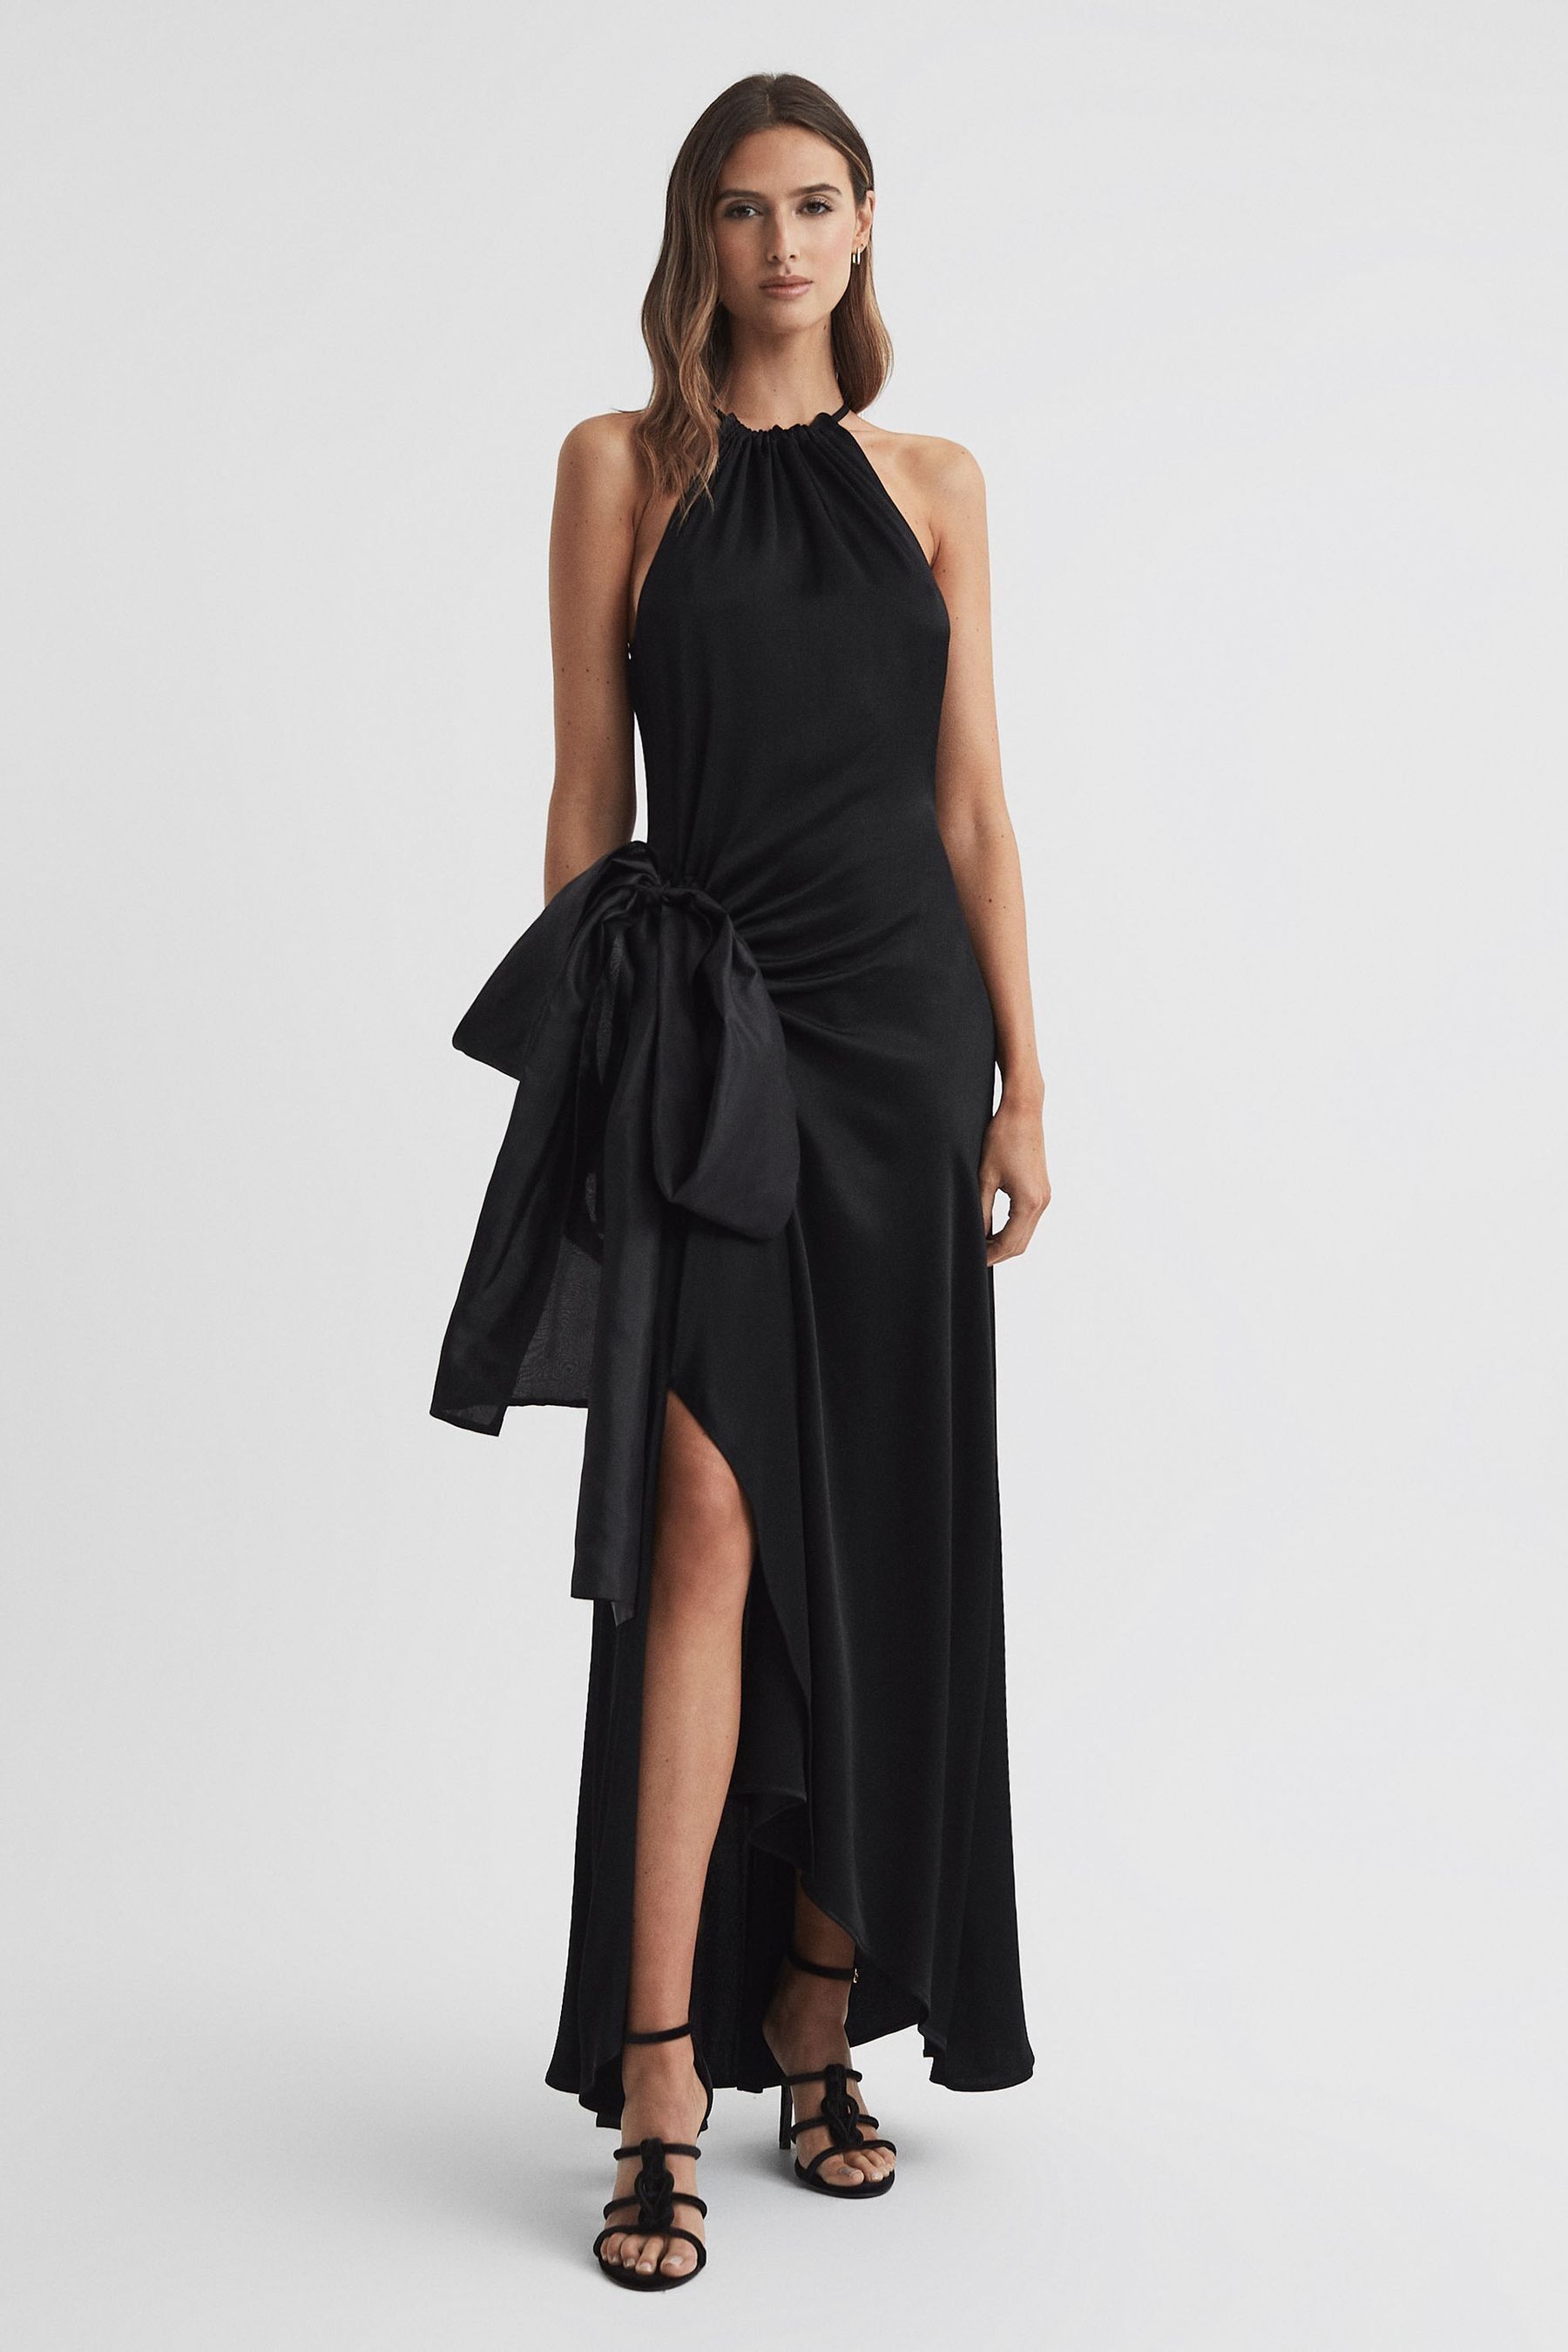 Reiss Luna - Black Satin Bow Halterneck Maxi Dress, Us 0